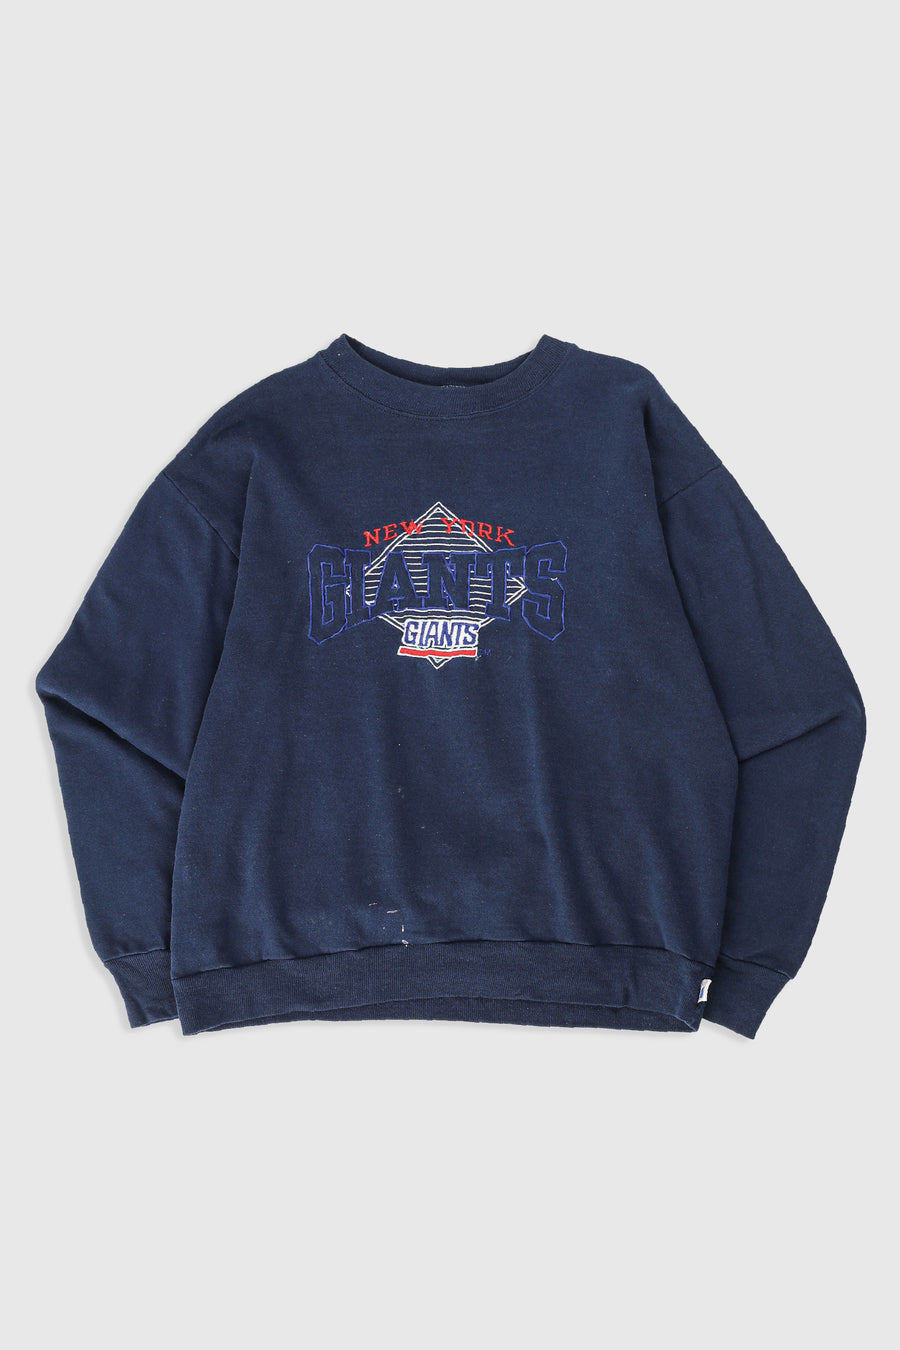 Vintage NY Giants NFL Sweatshirt - M